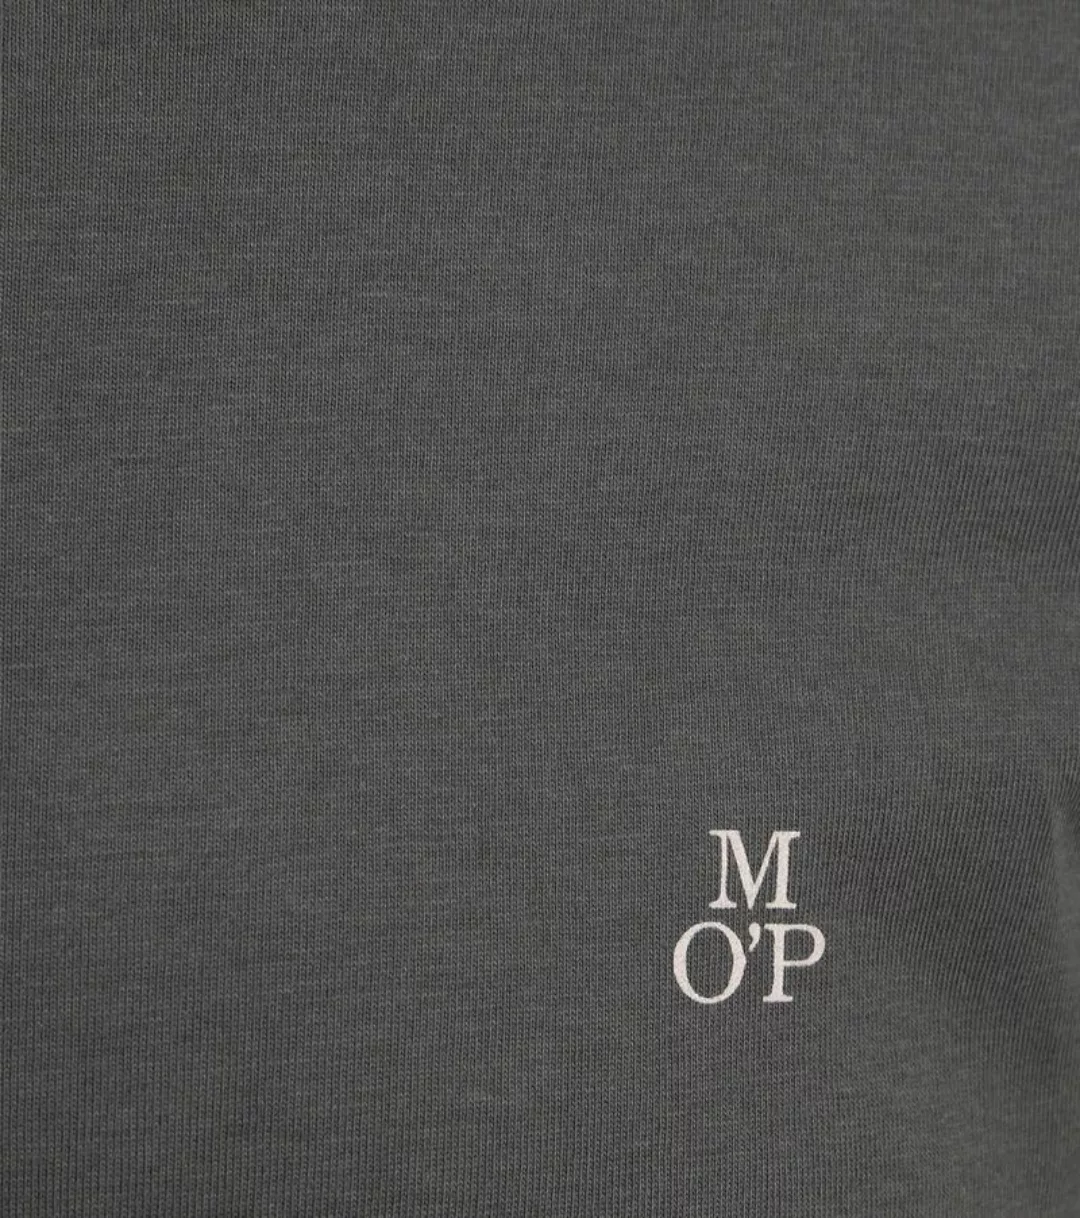 Marc O'Polo Long Sleeve T-Shirt Dunkelgrün - Größe XL günstig online kaufen